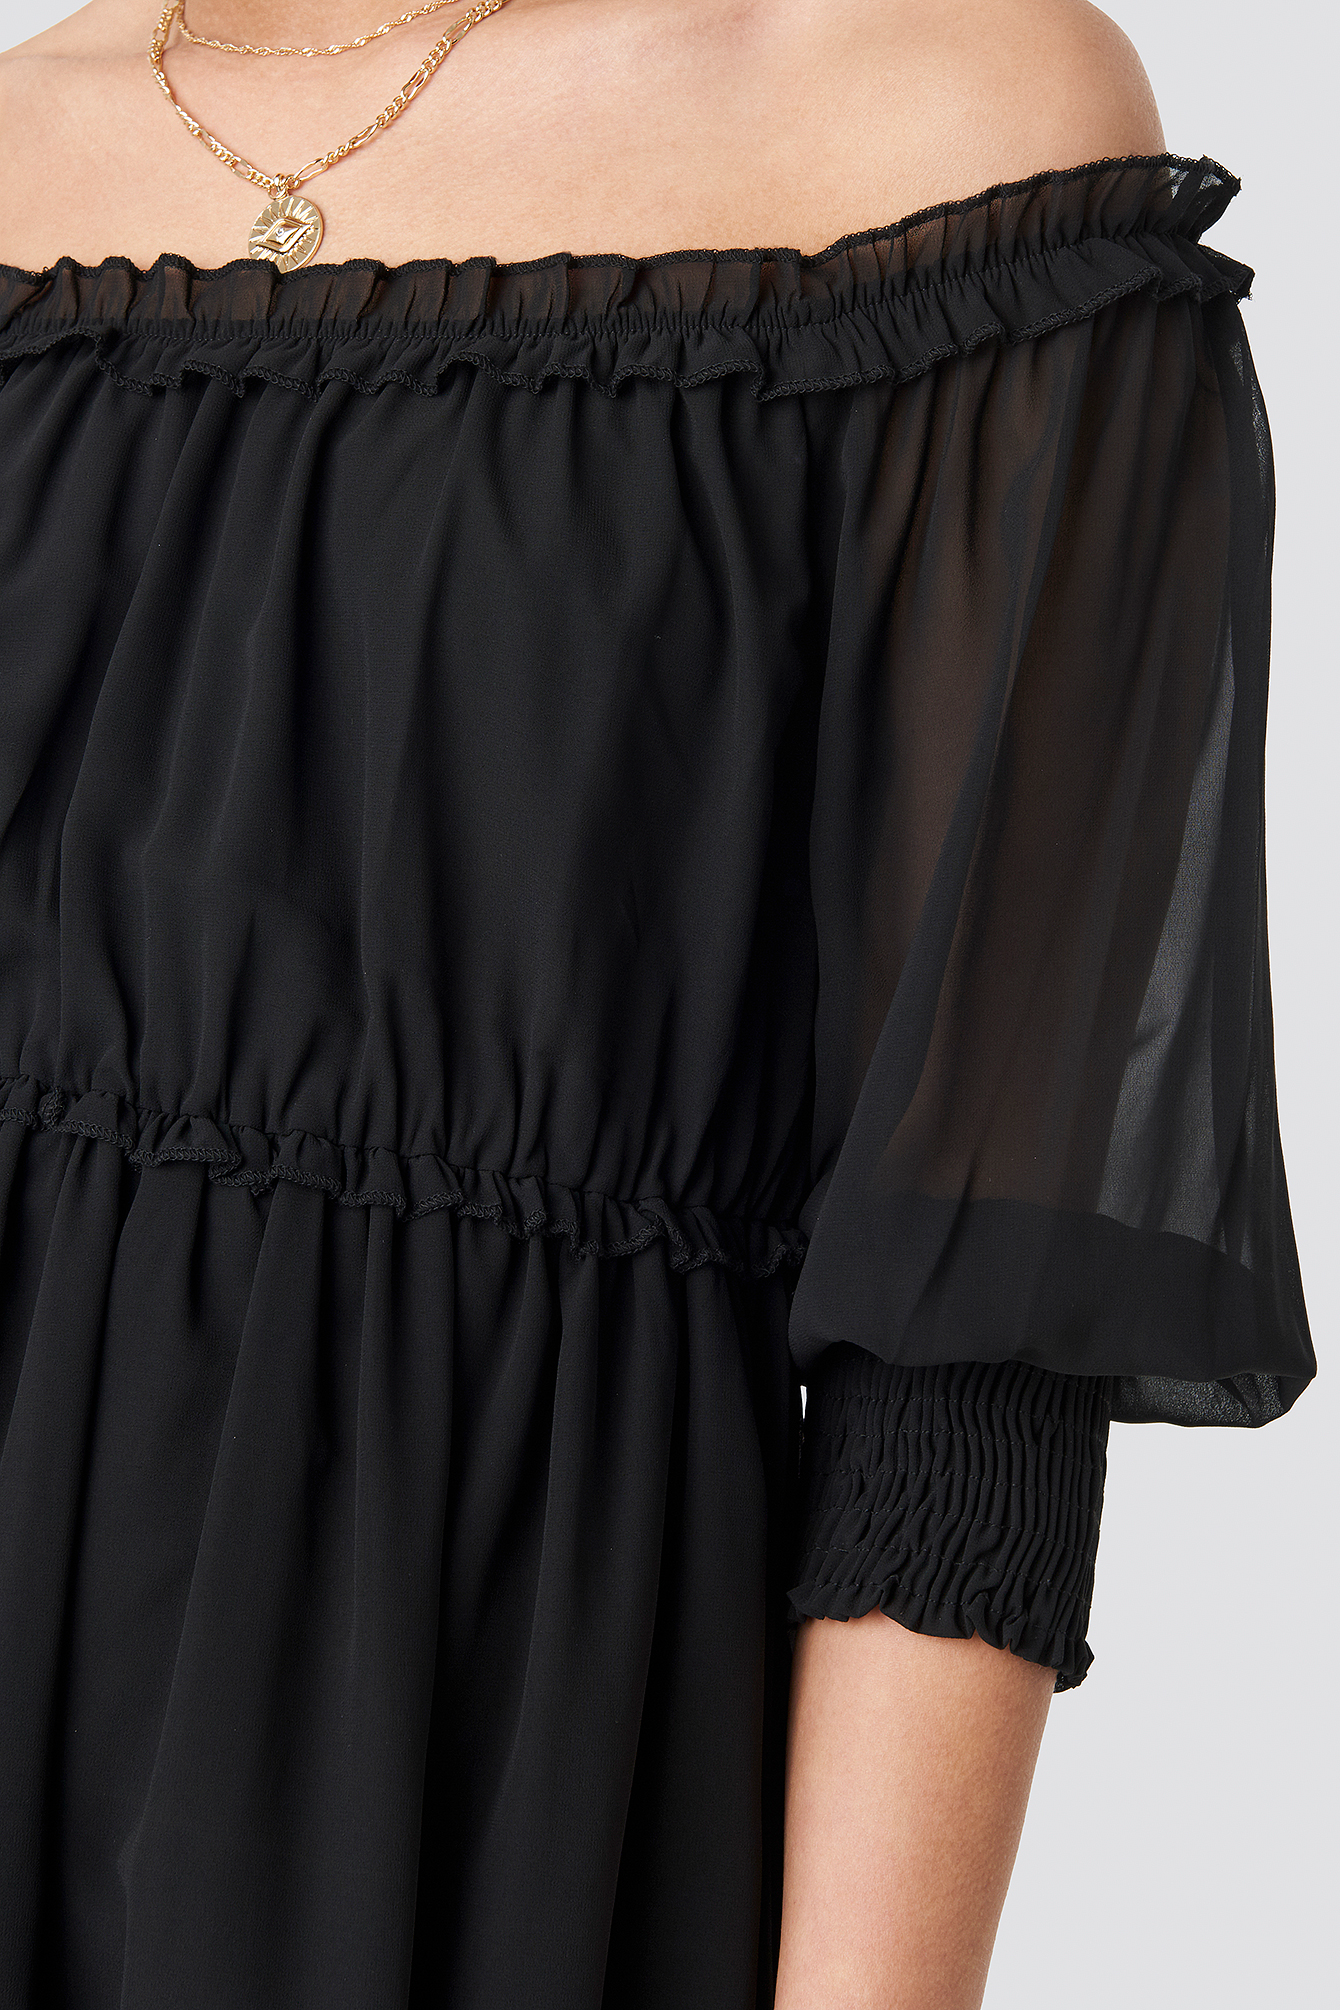 Black Off Shoulder Chiffon Midi Dress